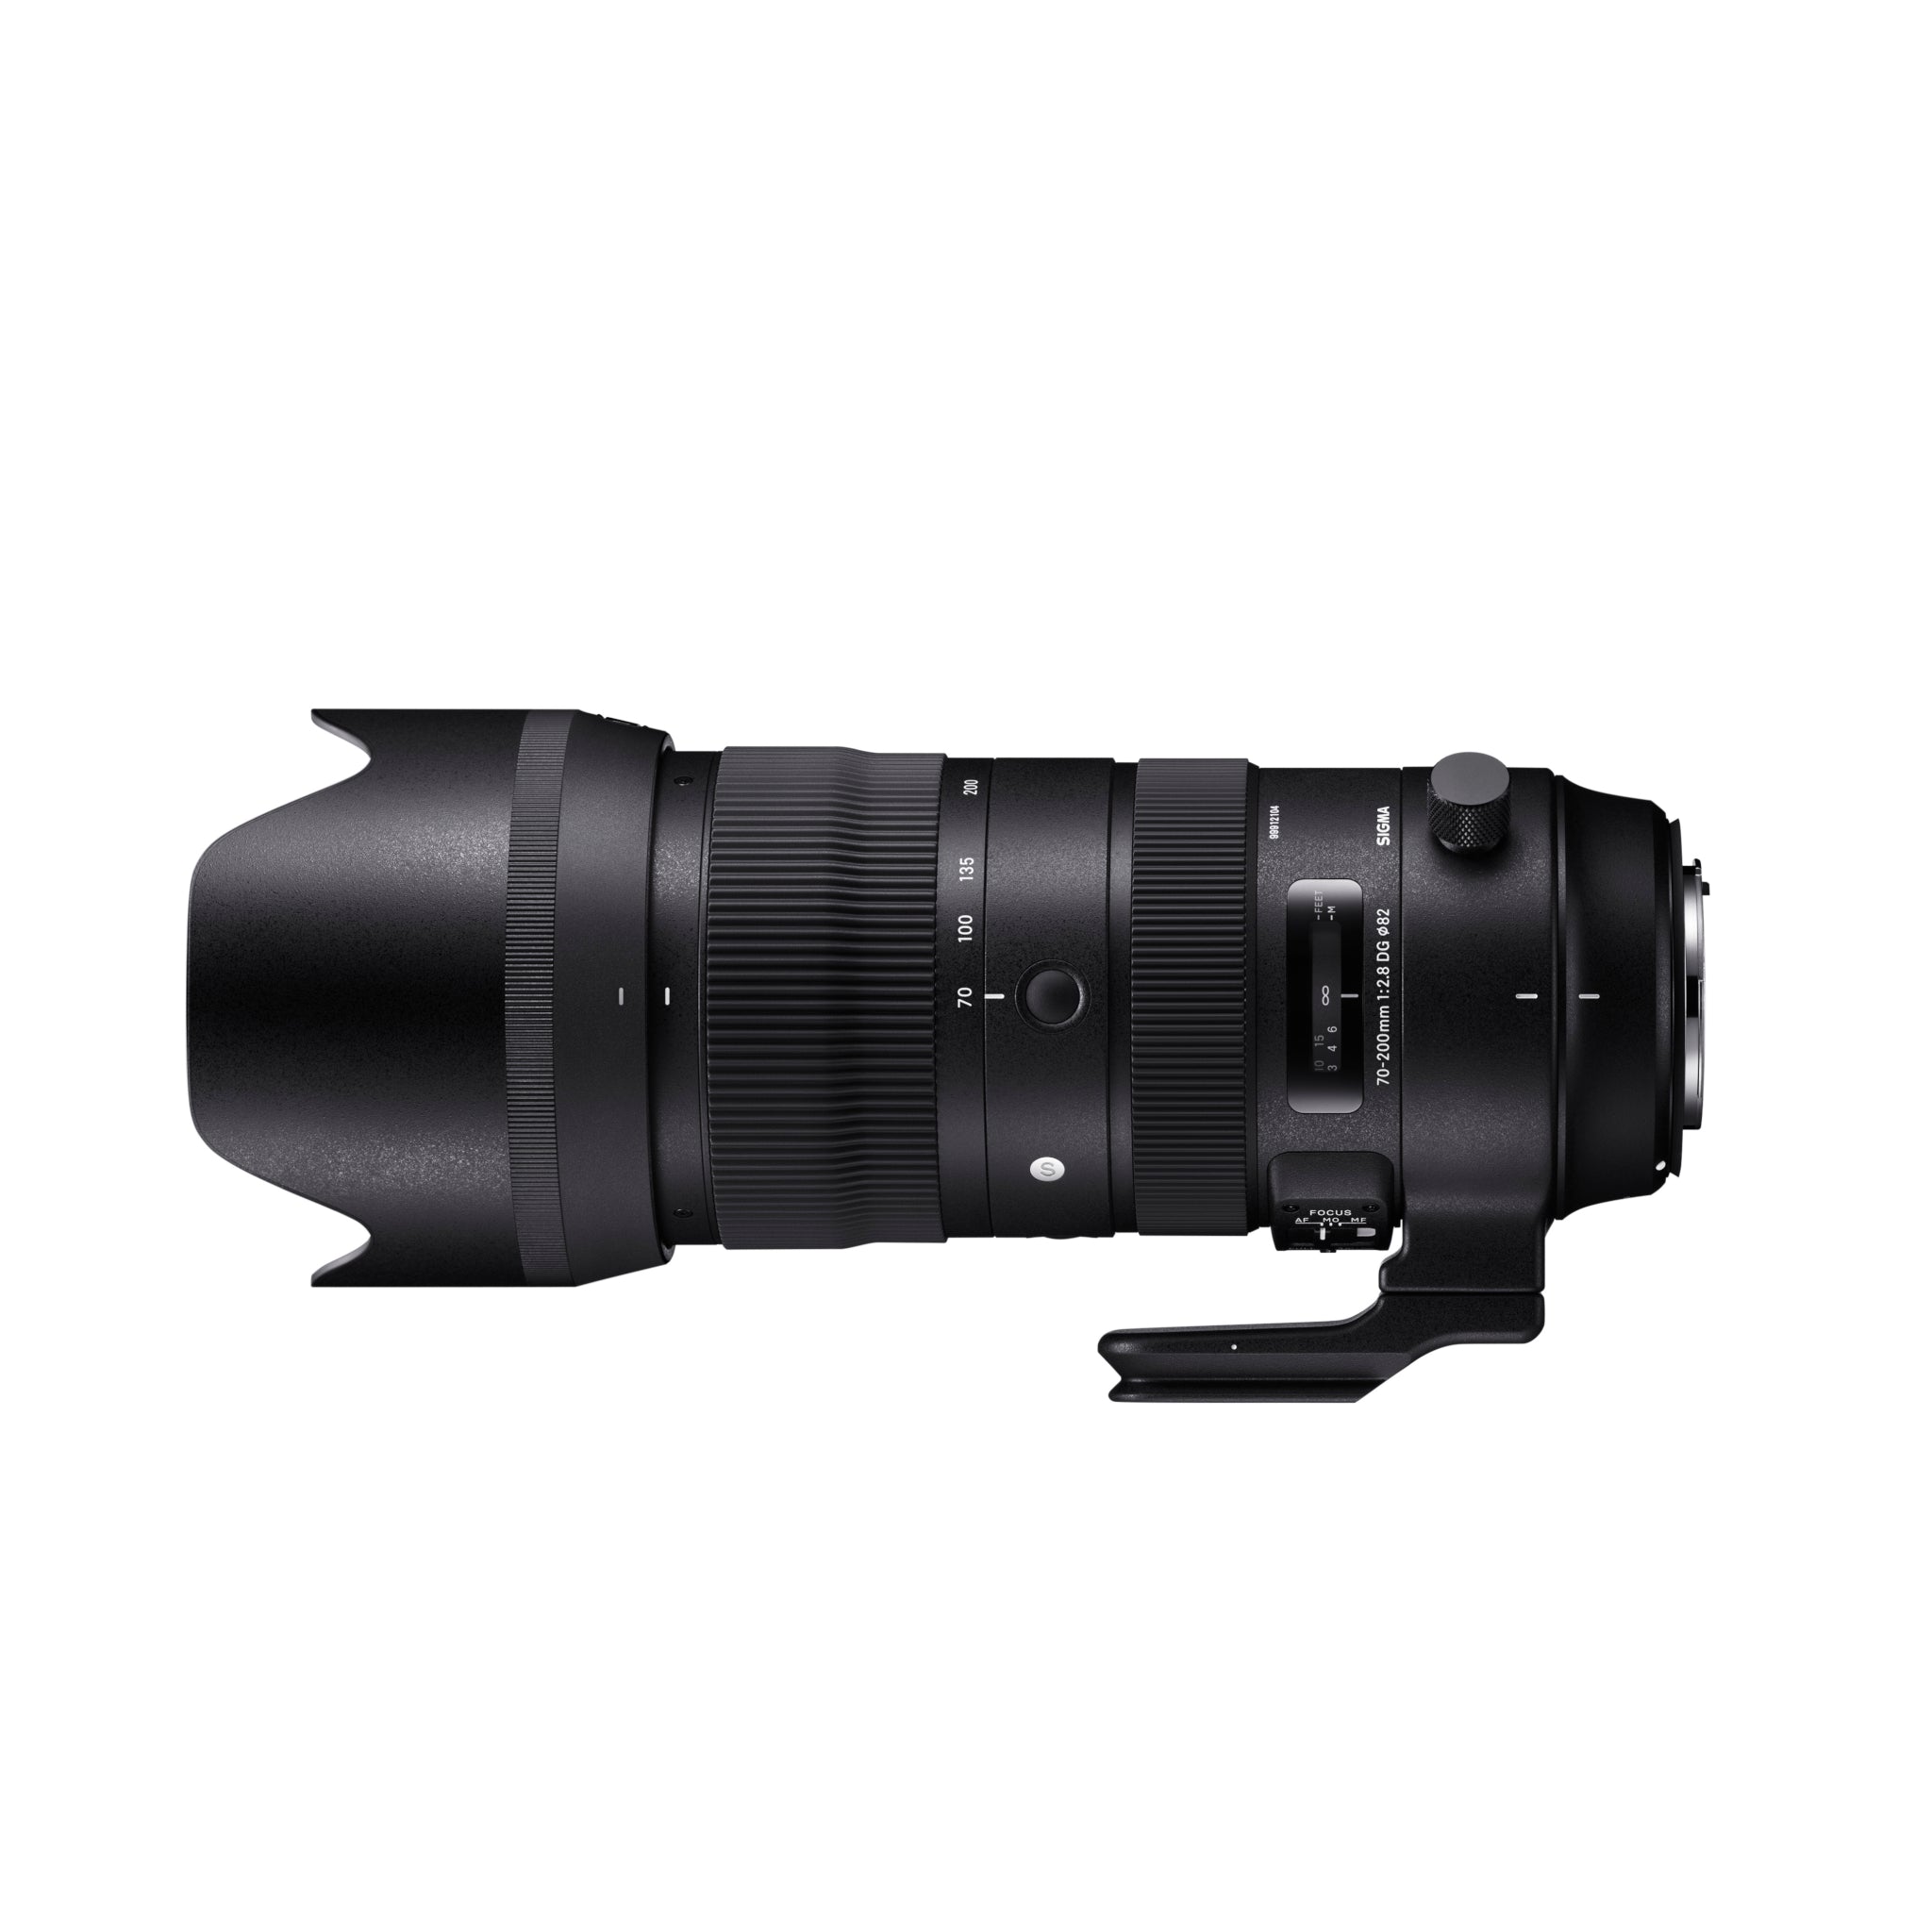 Sigma 70-200mm f2.8 DG OS HSM (Canon Mount) lens